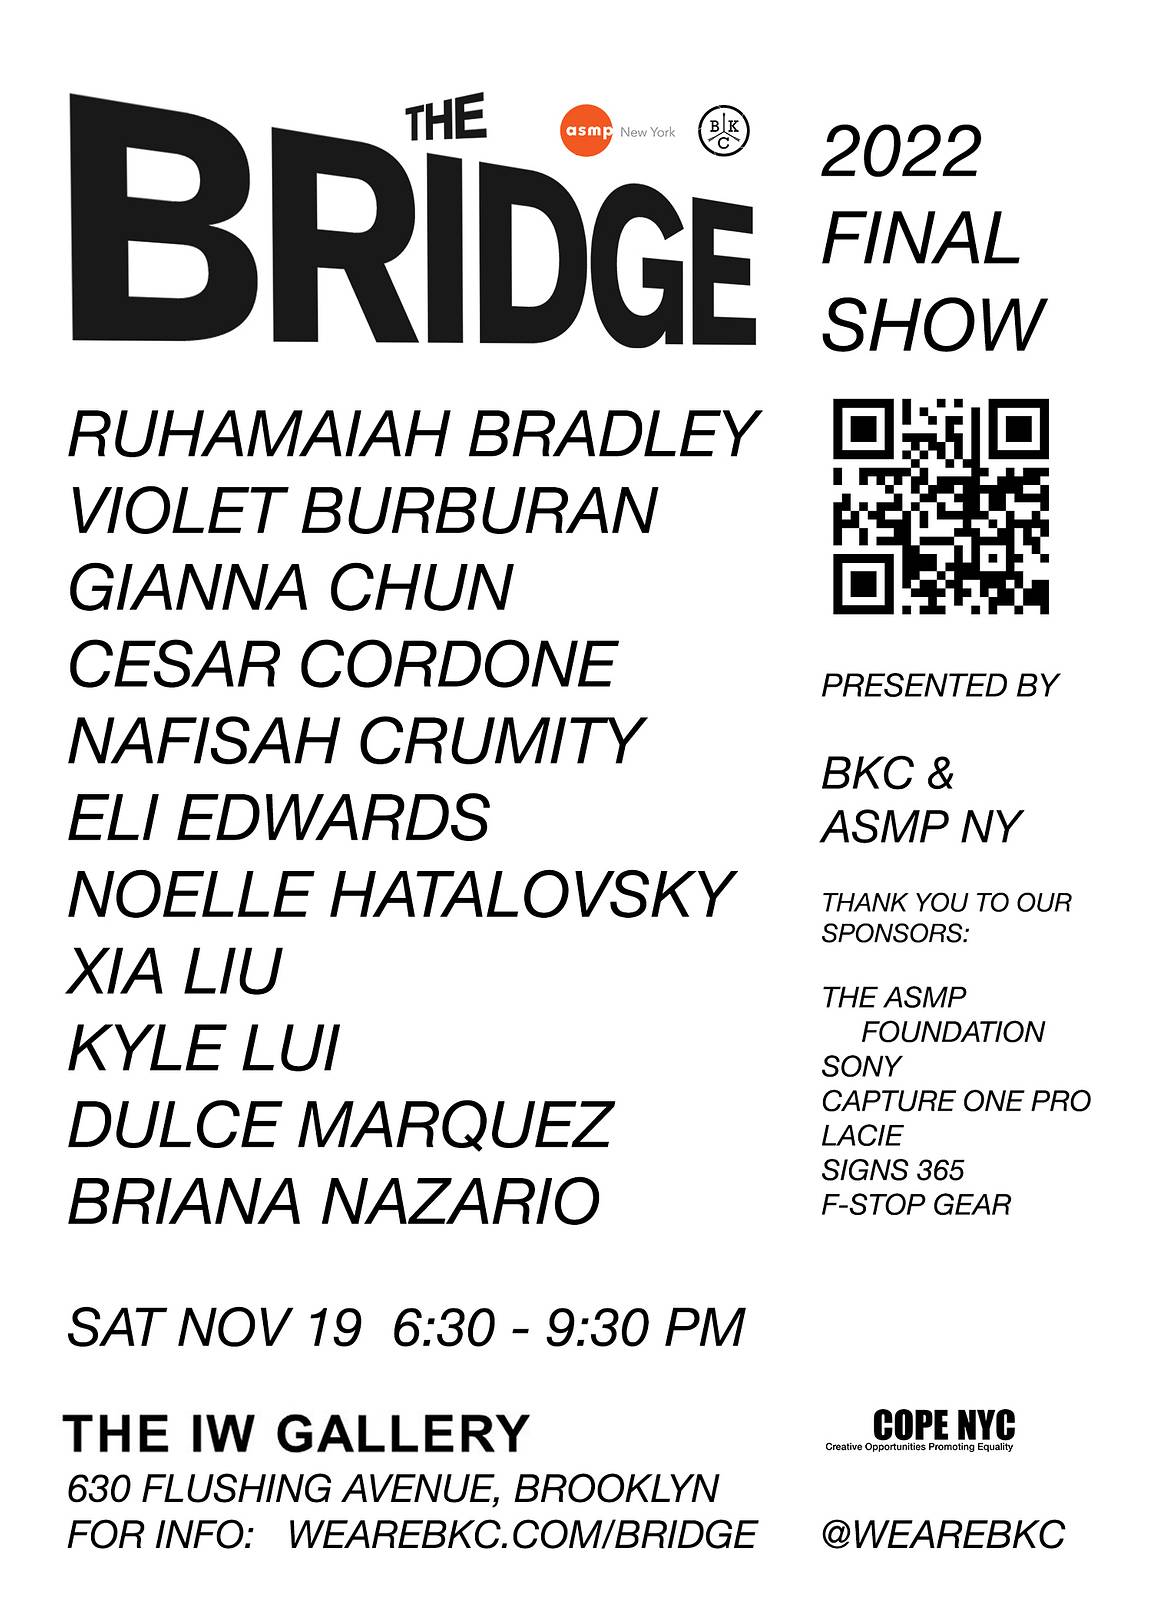 The Bridge 2022 Final Show